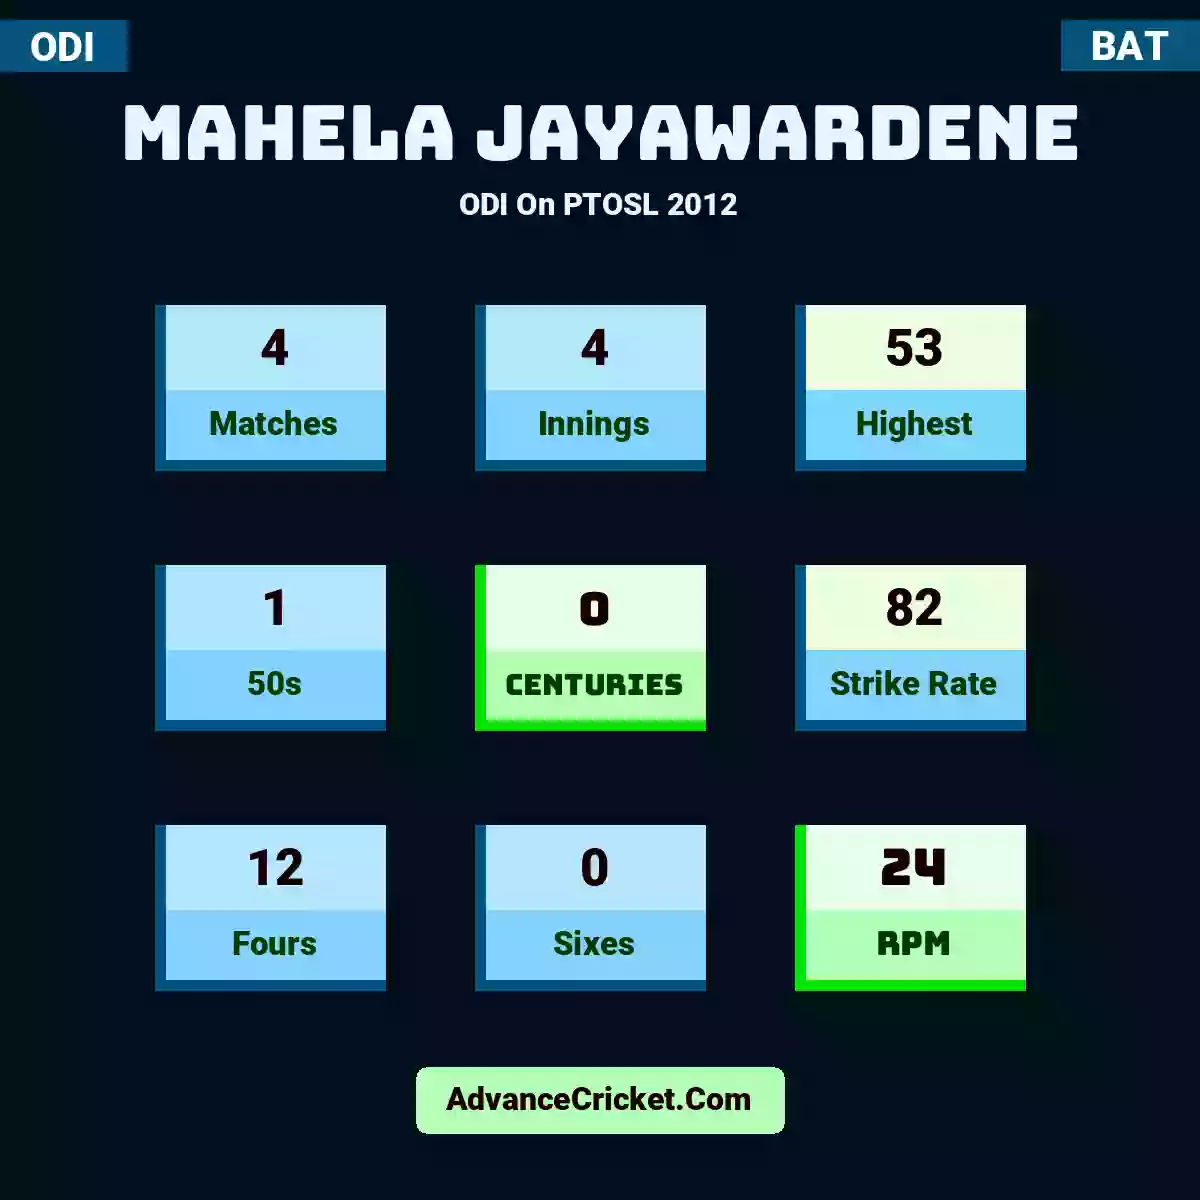 Mahela Jayawardene ODI  On PTOSL 2012, Mahela Jayawardene played 4 matches, scored 53 runs as highest, 1 half-centuries, and 0 centuries, with a strike rate of 82. M.Jayawardene hit 12 fours and 0 sixes, with an RPM of 24.